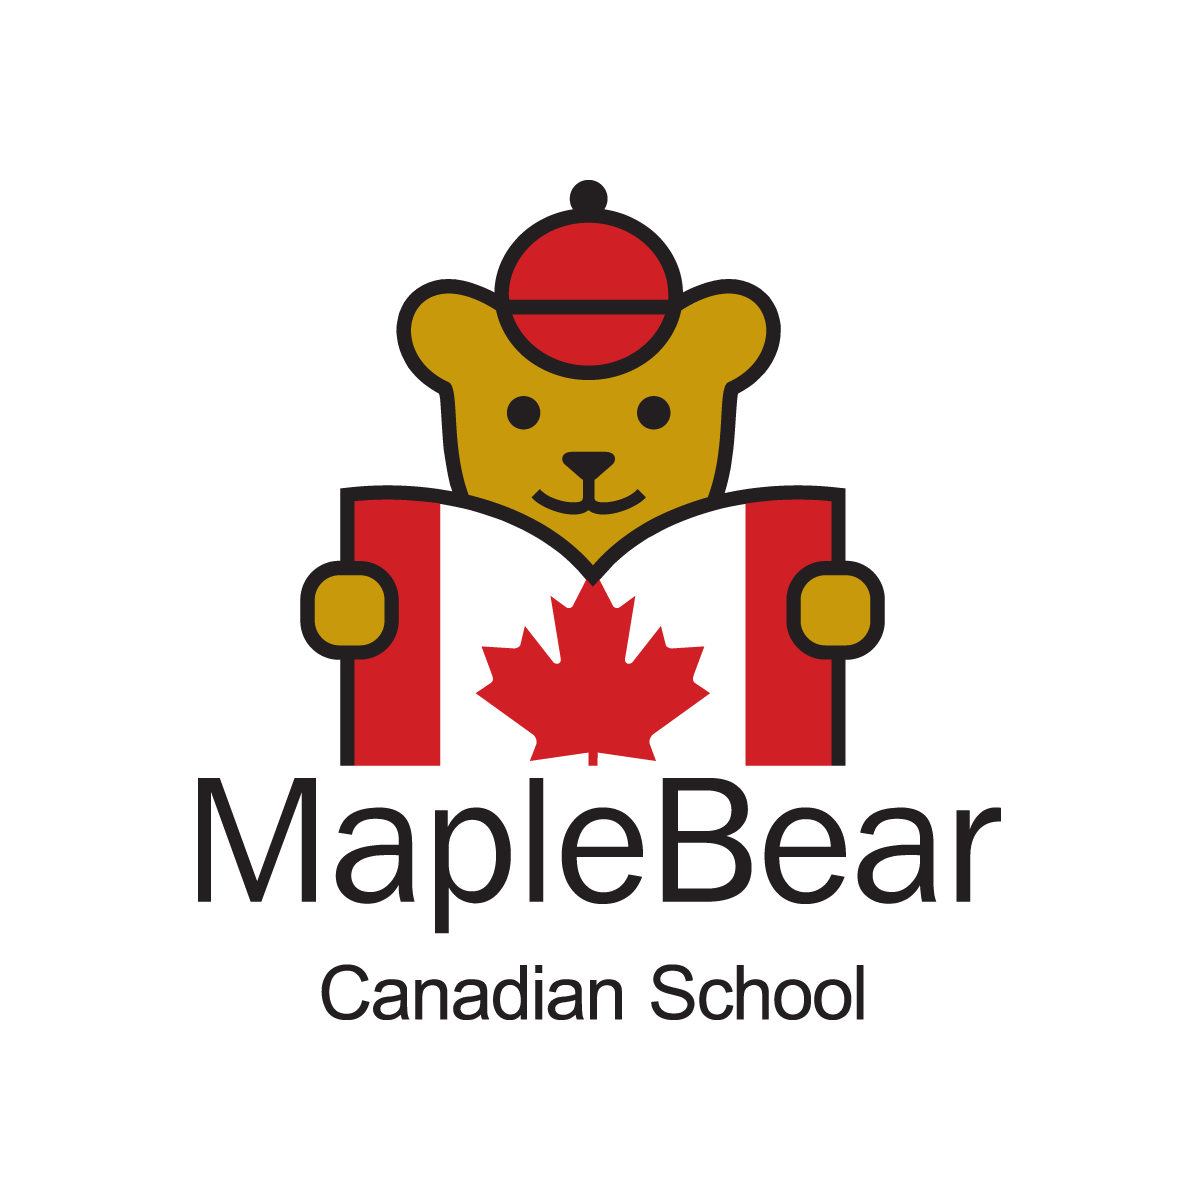 Maple Bear logo